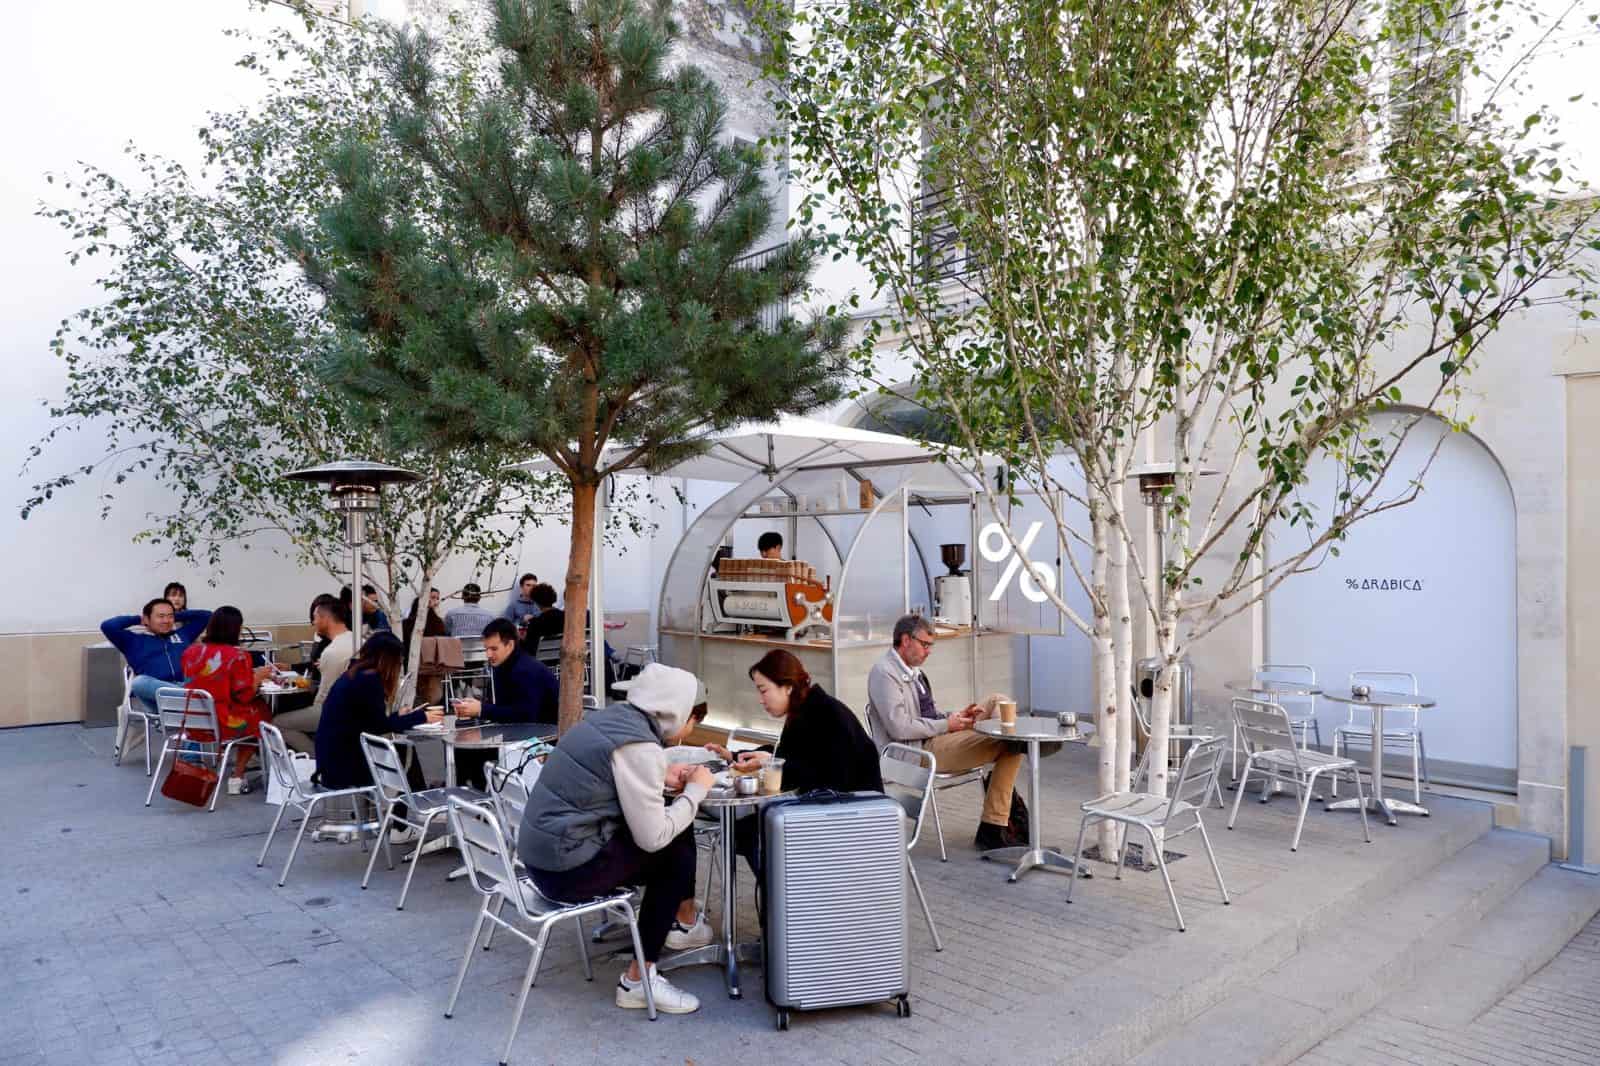 The outdoor cafe 100% Arabica at Beaupassage in Paris' St Germain Left Bank Neighborhood